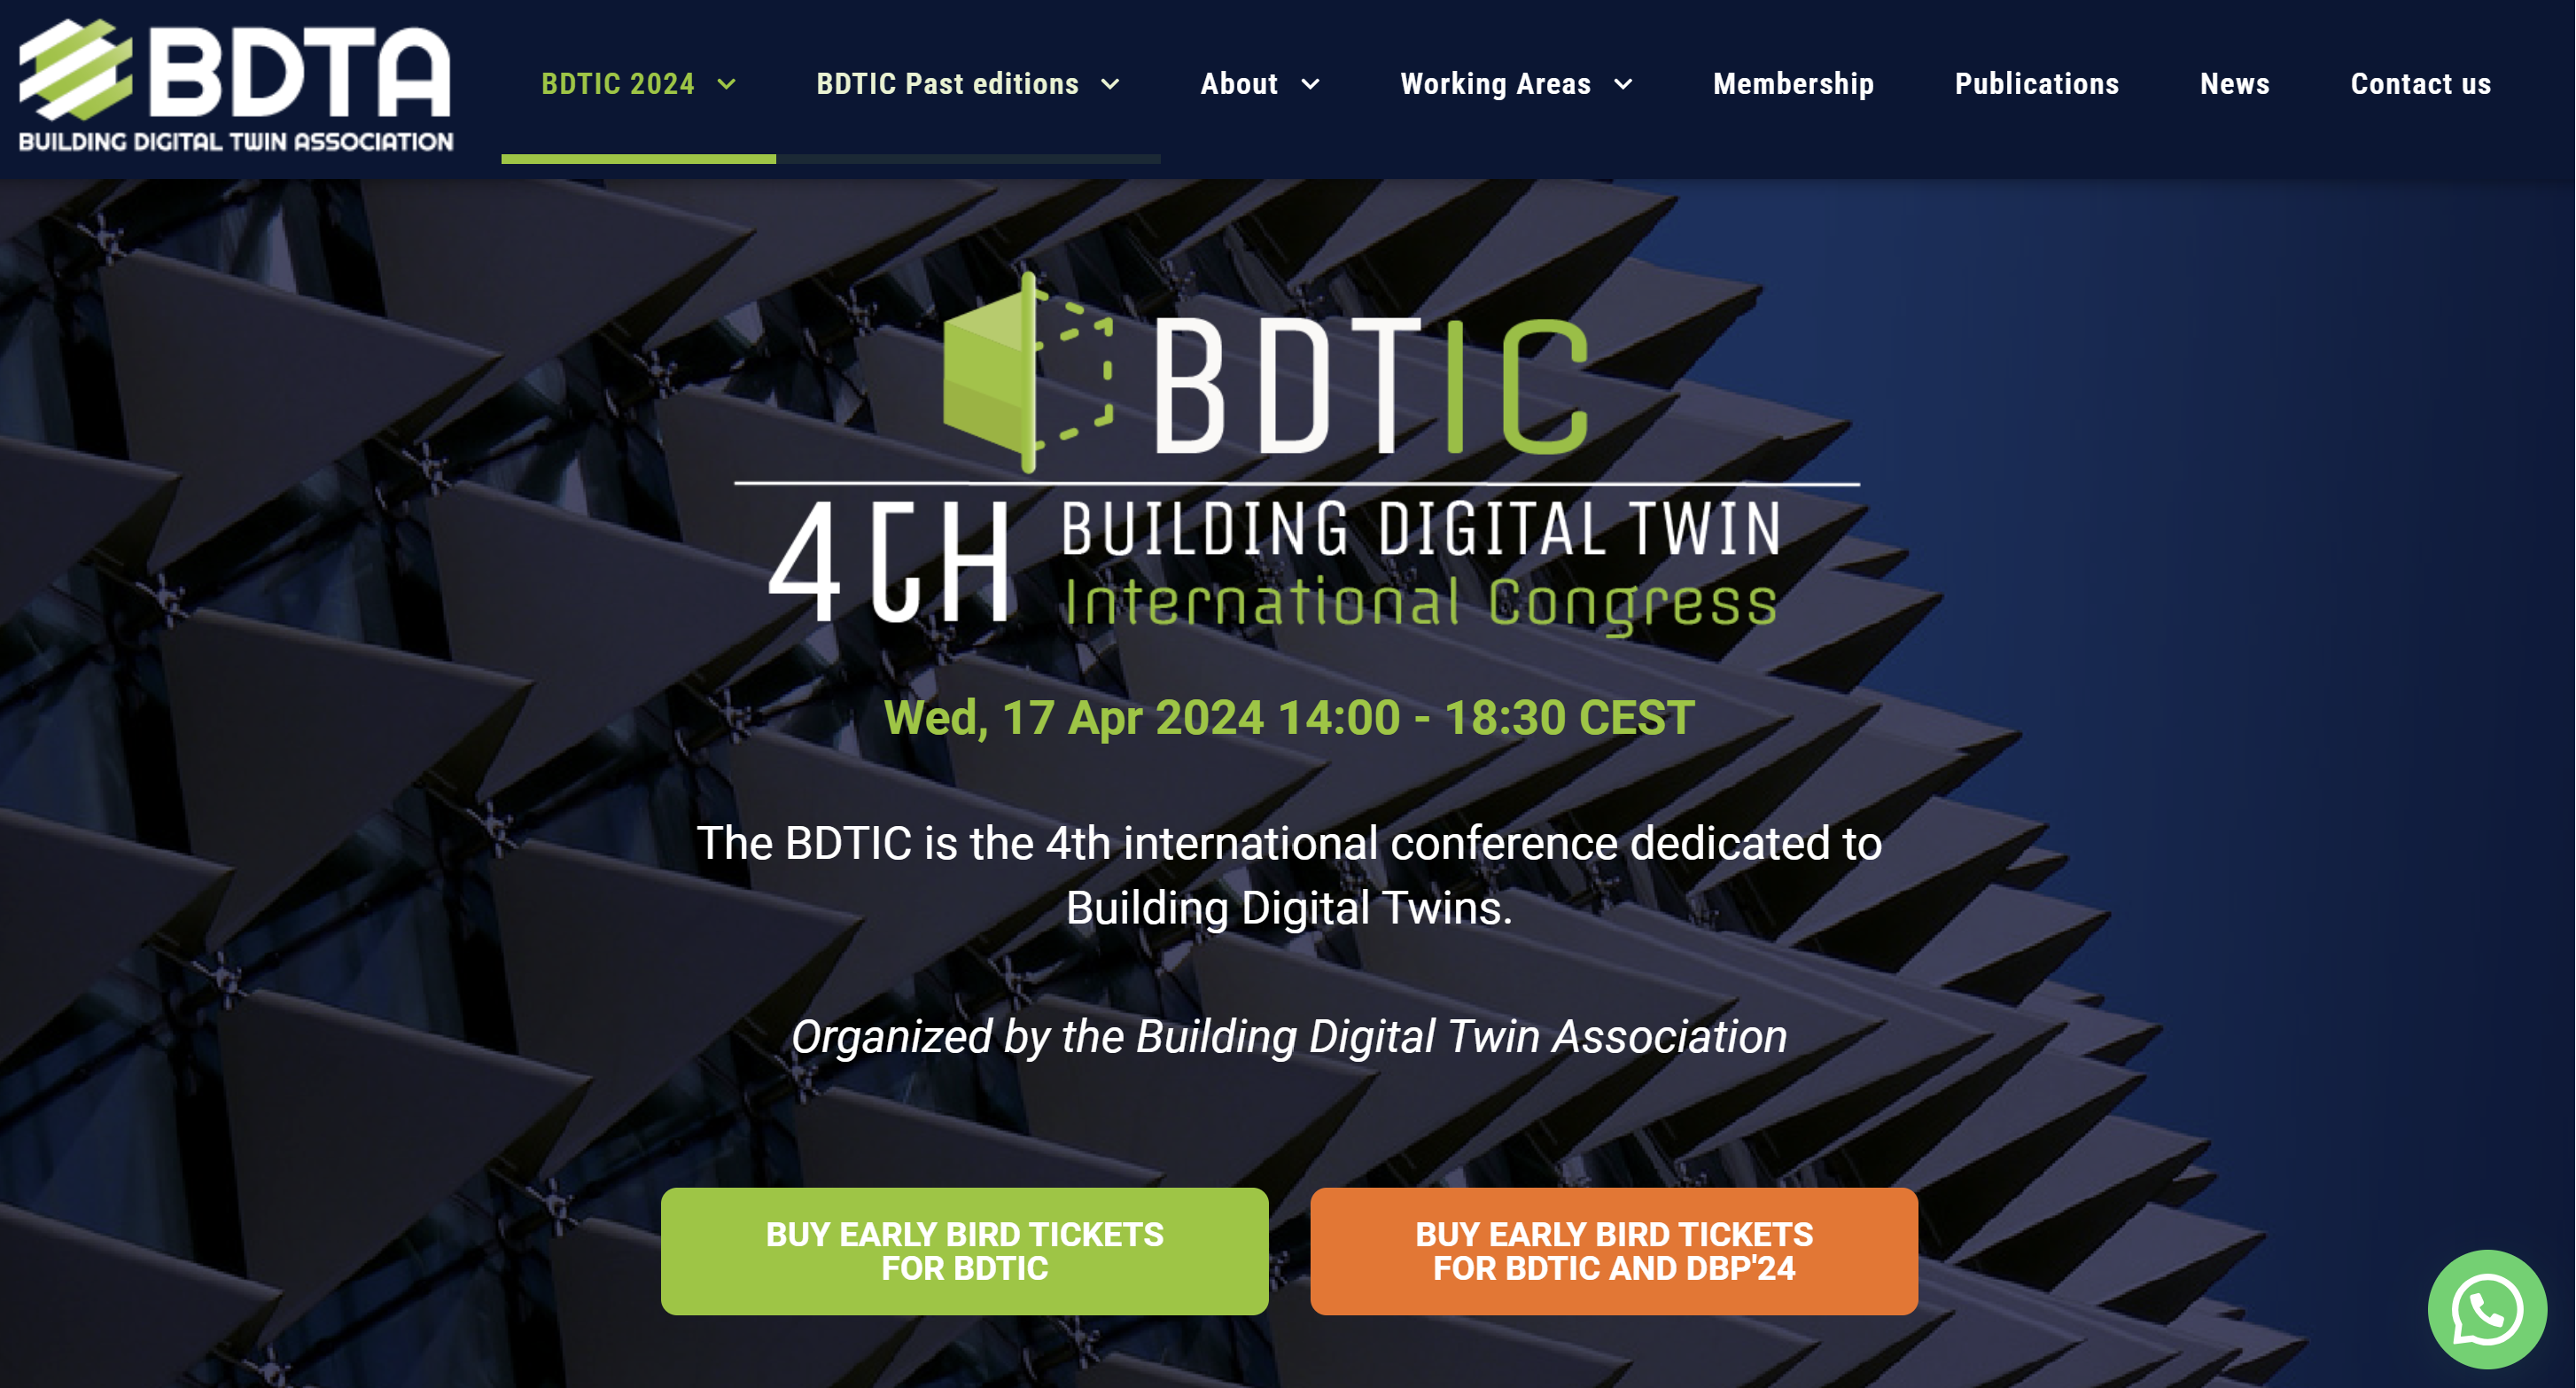 Building Digital Twin Congress